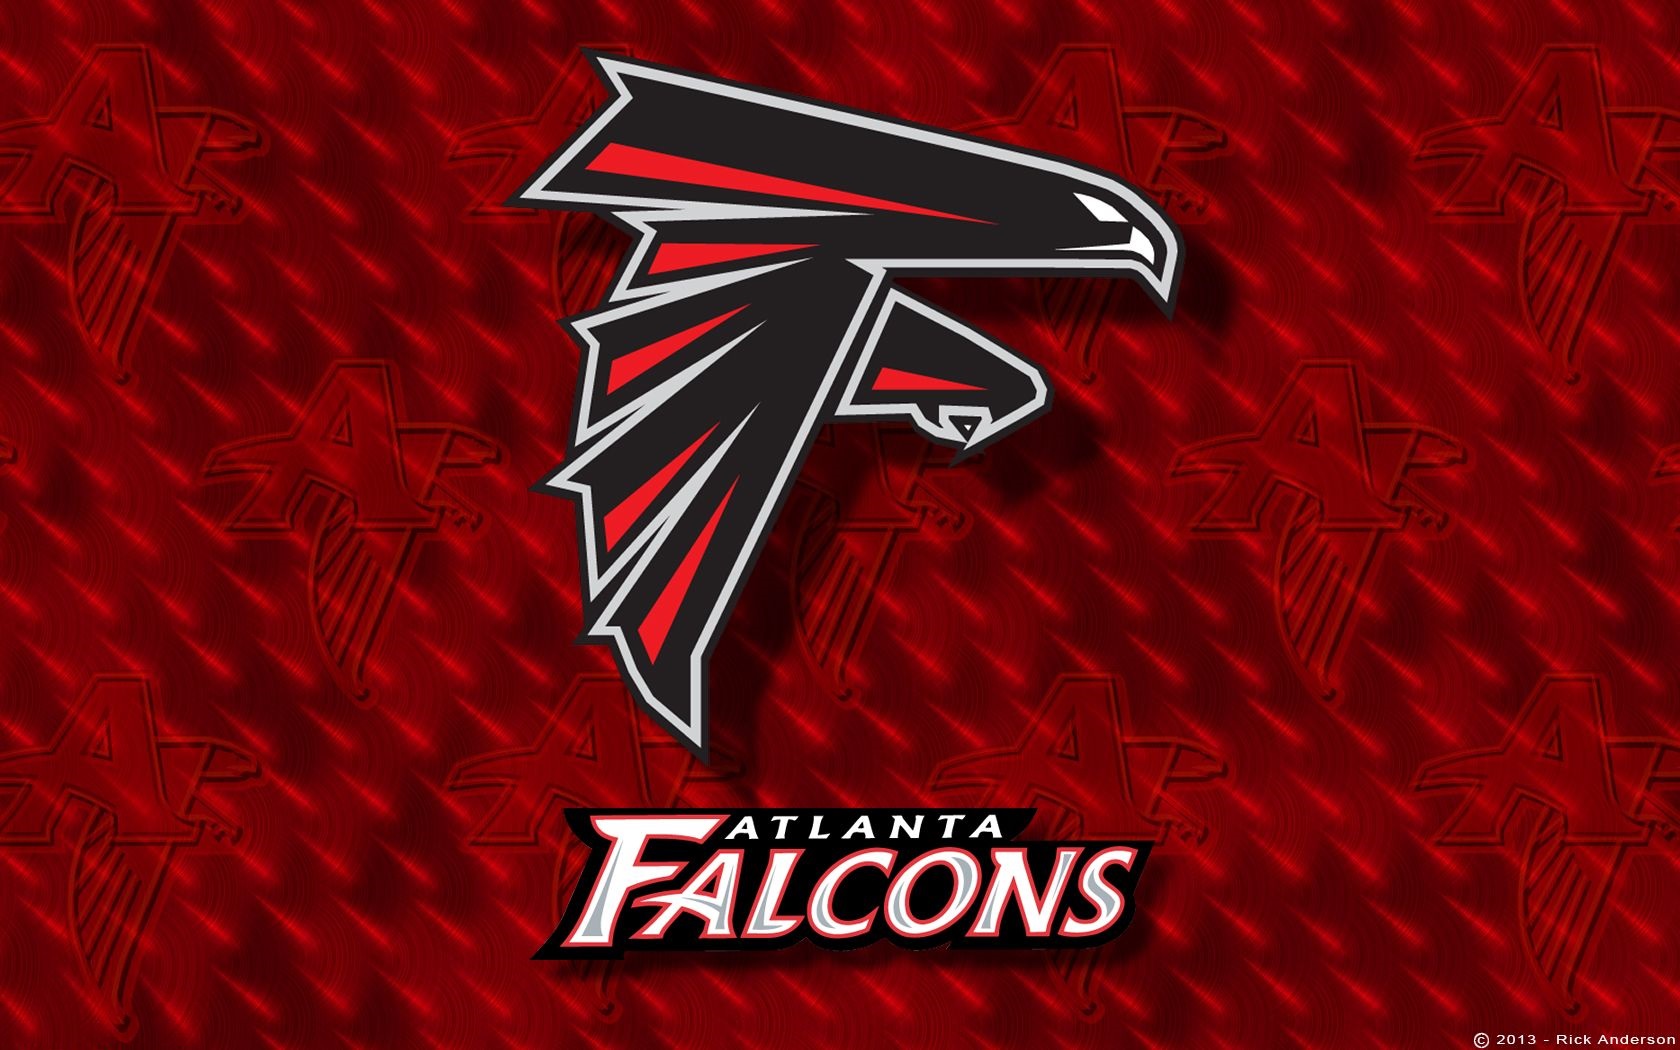 Atlanta Falcons Wallpapers High Quality